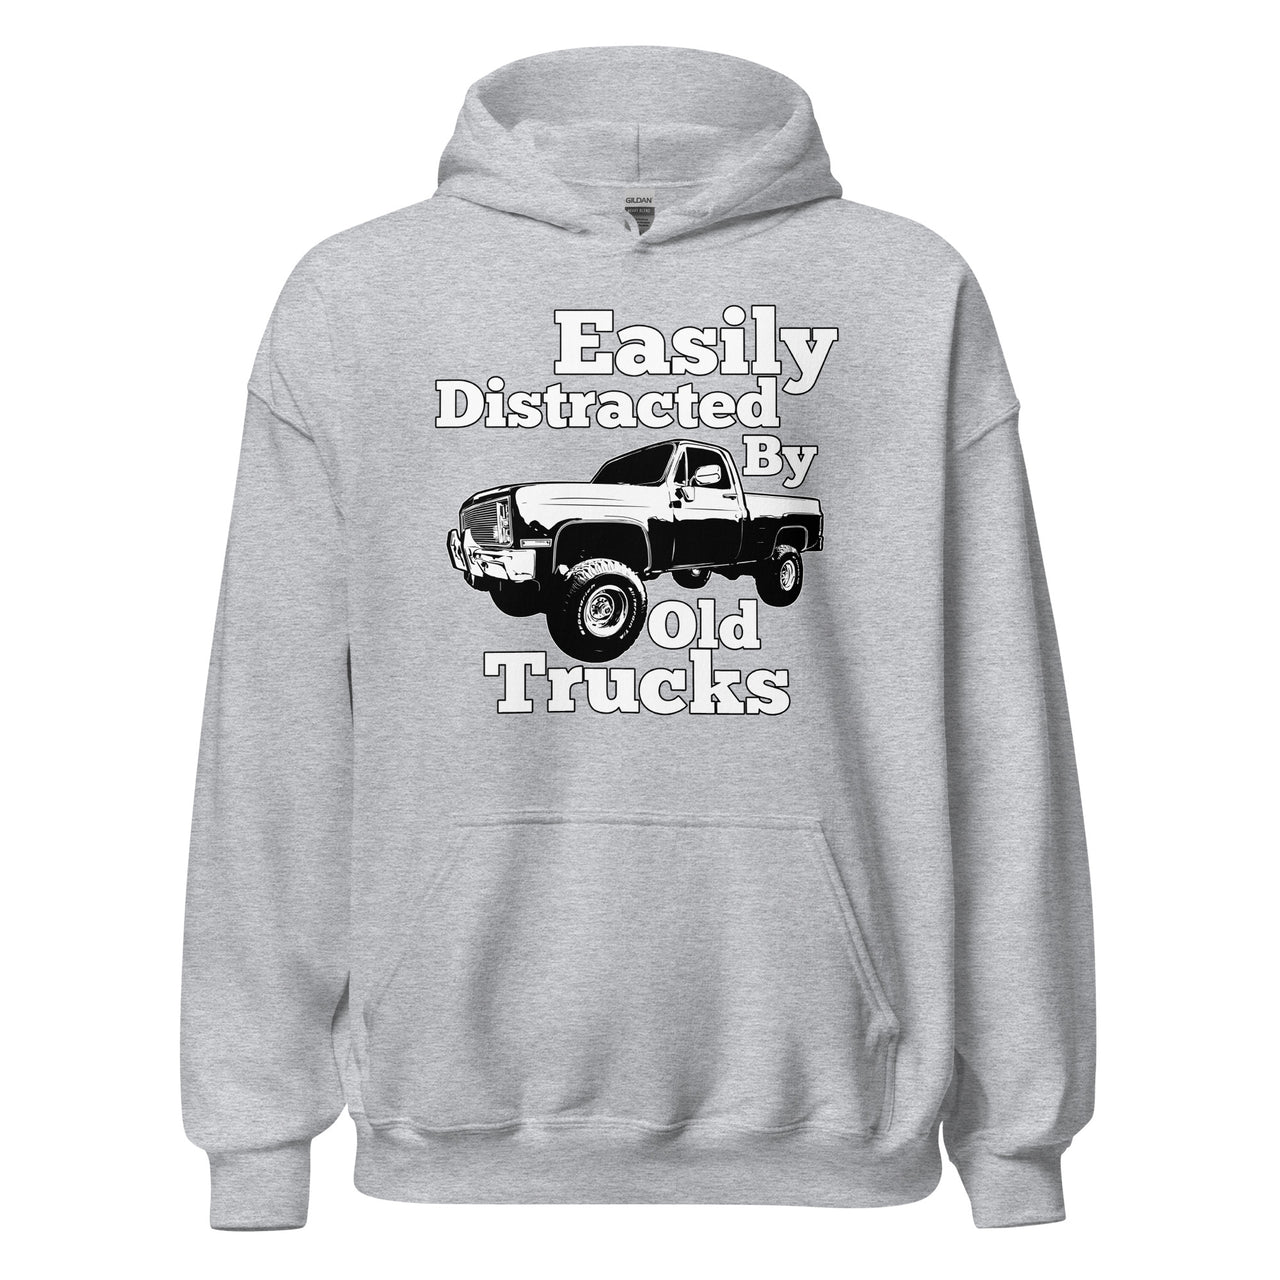 sport grey Square Body Truck Hoodie Sweatshirt - Easily Distracted By Old Trucks